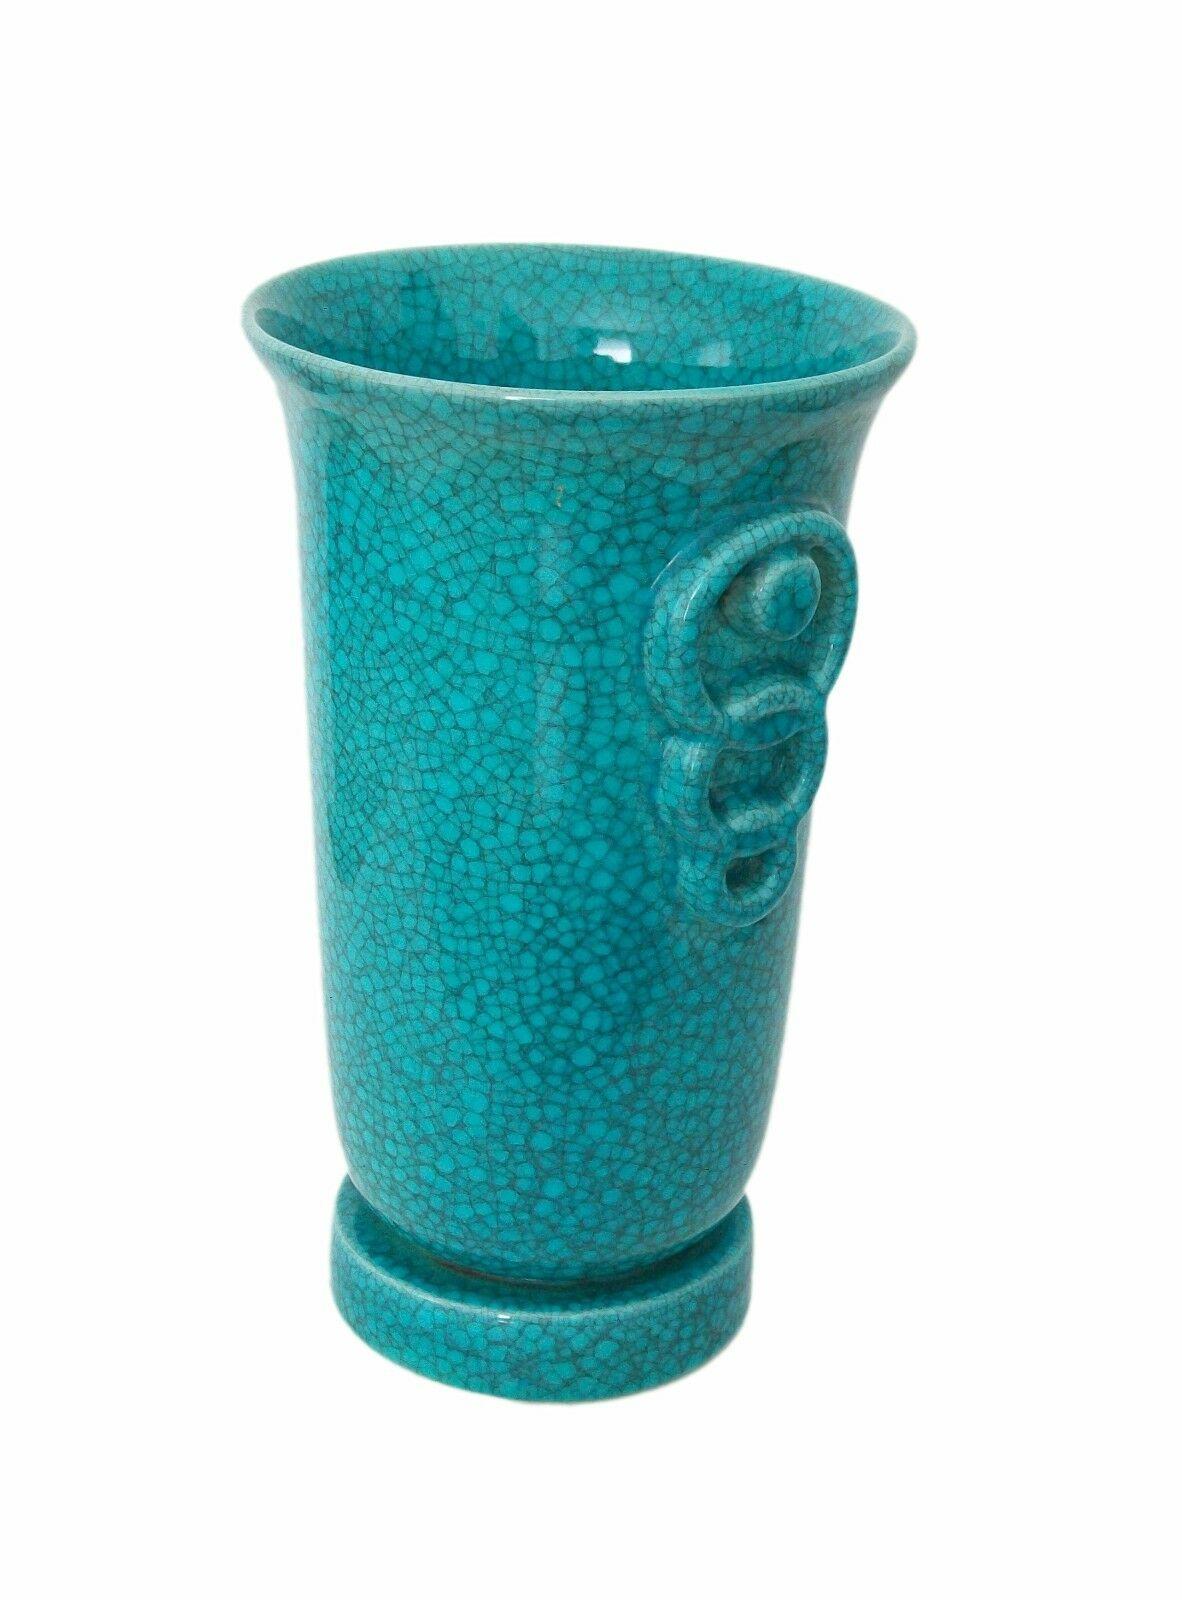 Belgian Art Deco Turquoise Crackle Glaze Vase, Belgium, Circa 1930's For Sale